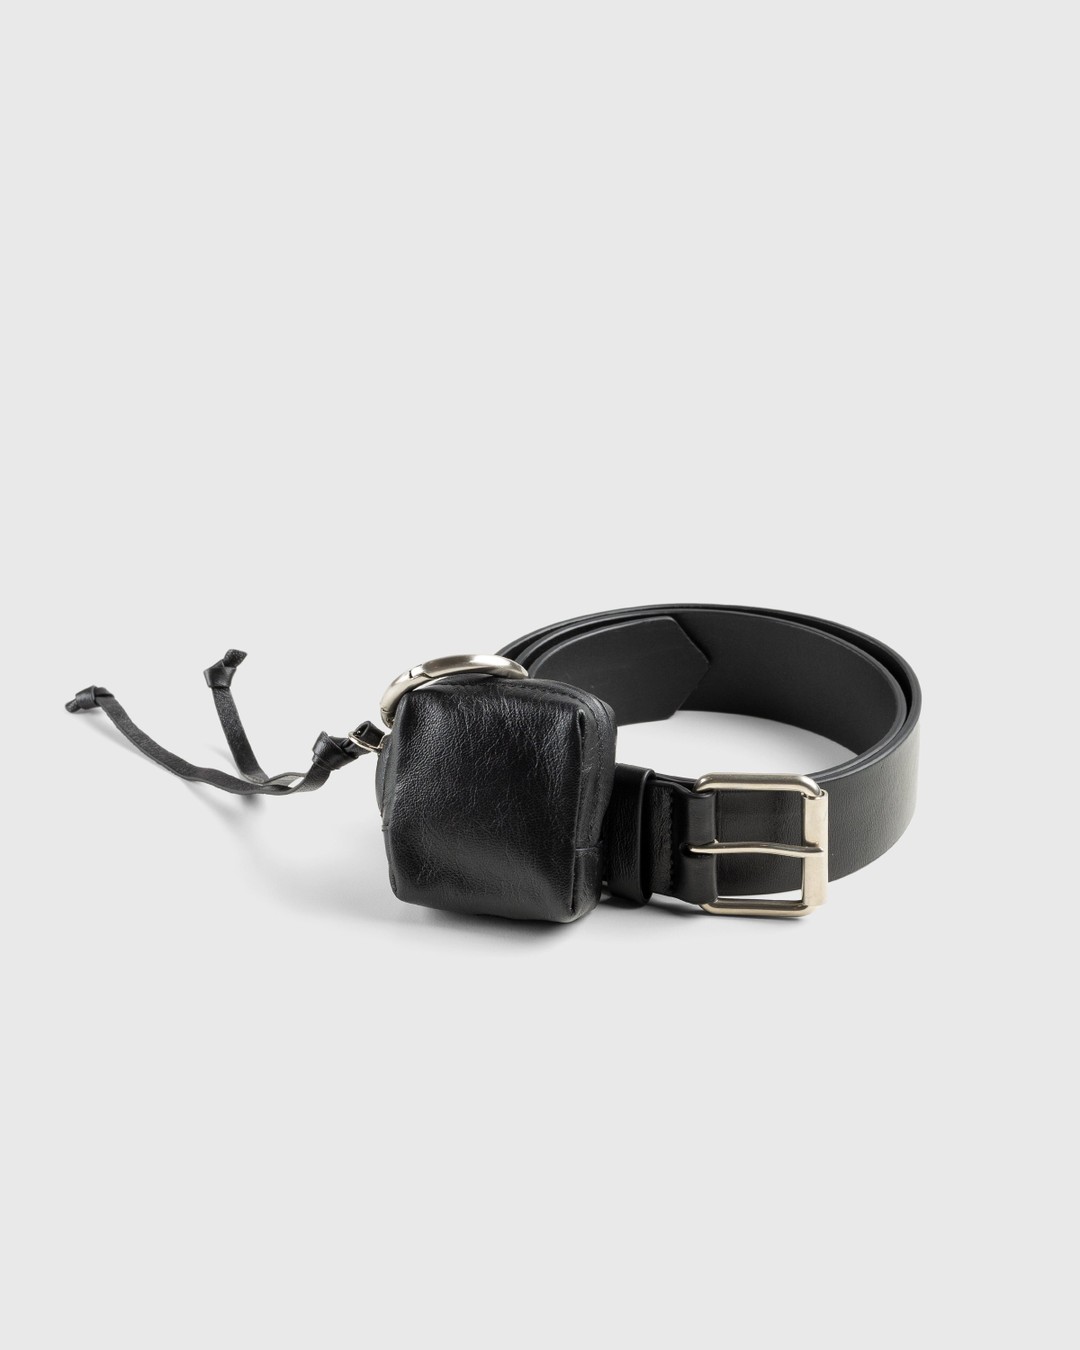 Dries van Noten – Leather Belt With Pouch Black - Belts - Black - Image 2